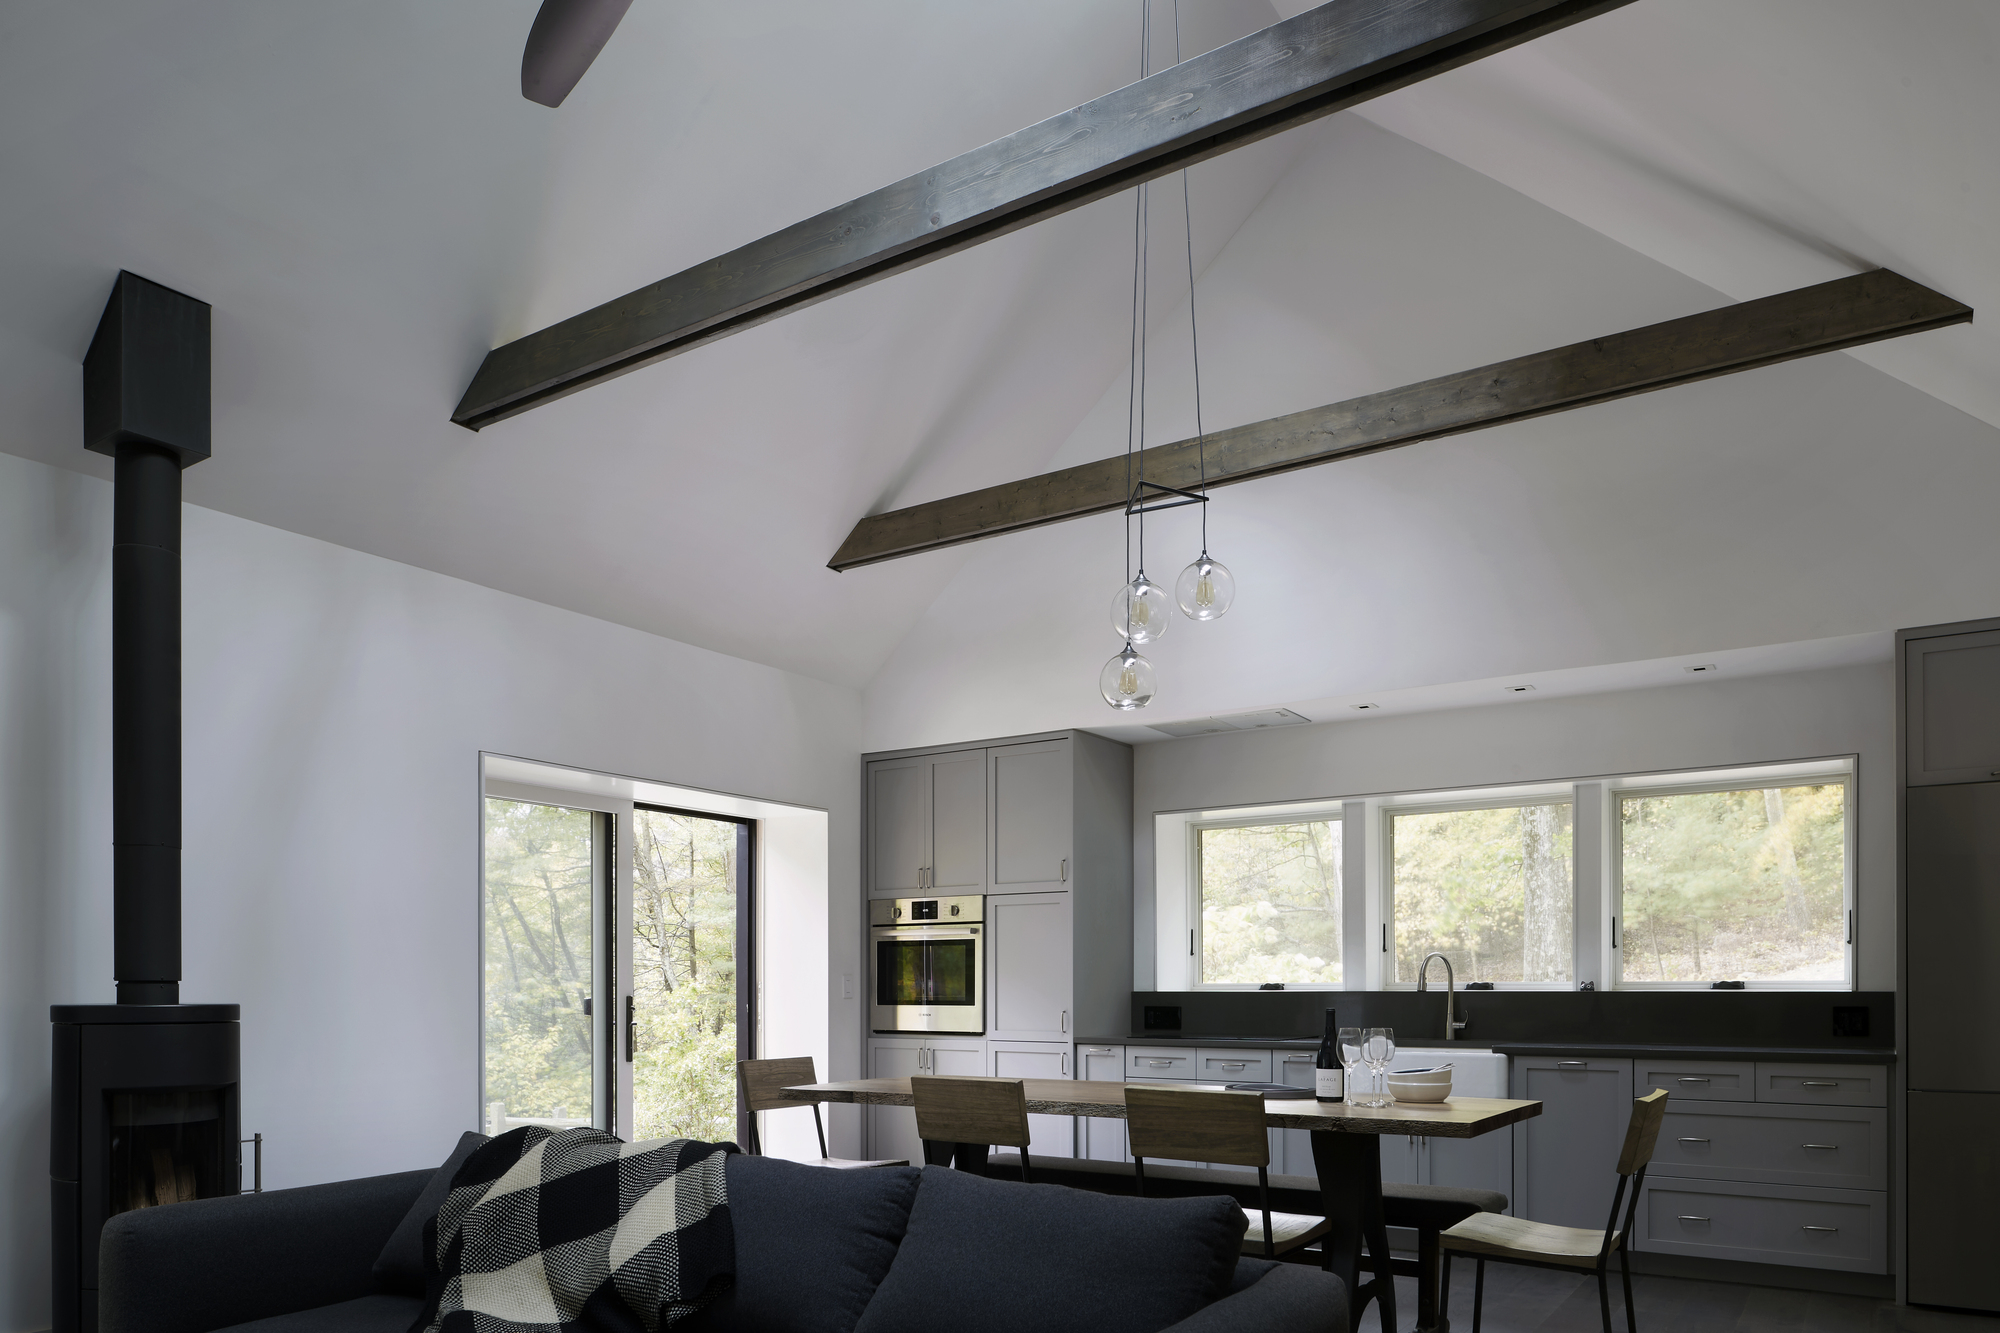 General 2000x1333 house interior interior design kitchen countertops chair table